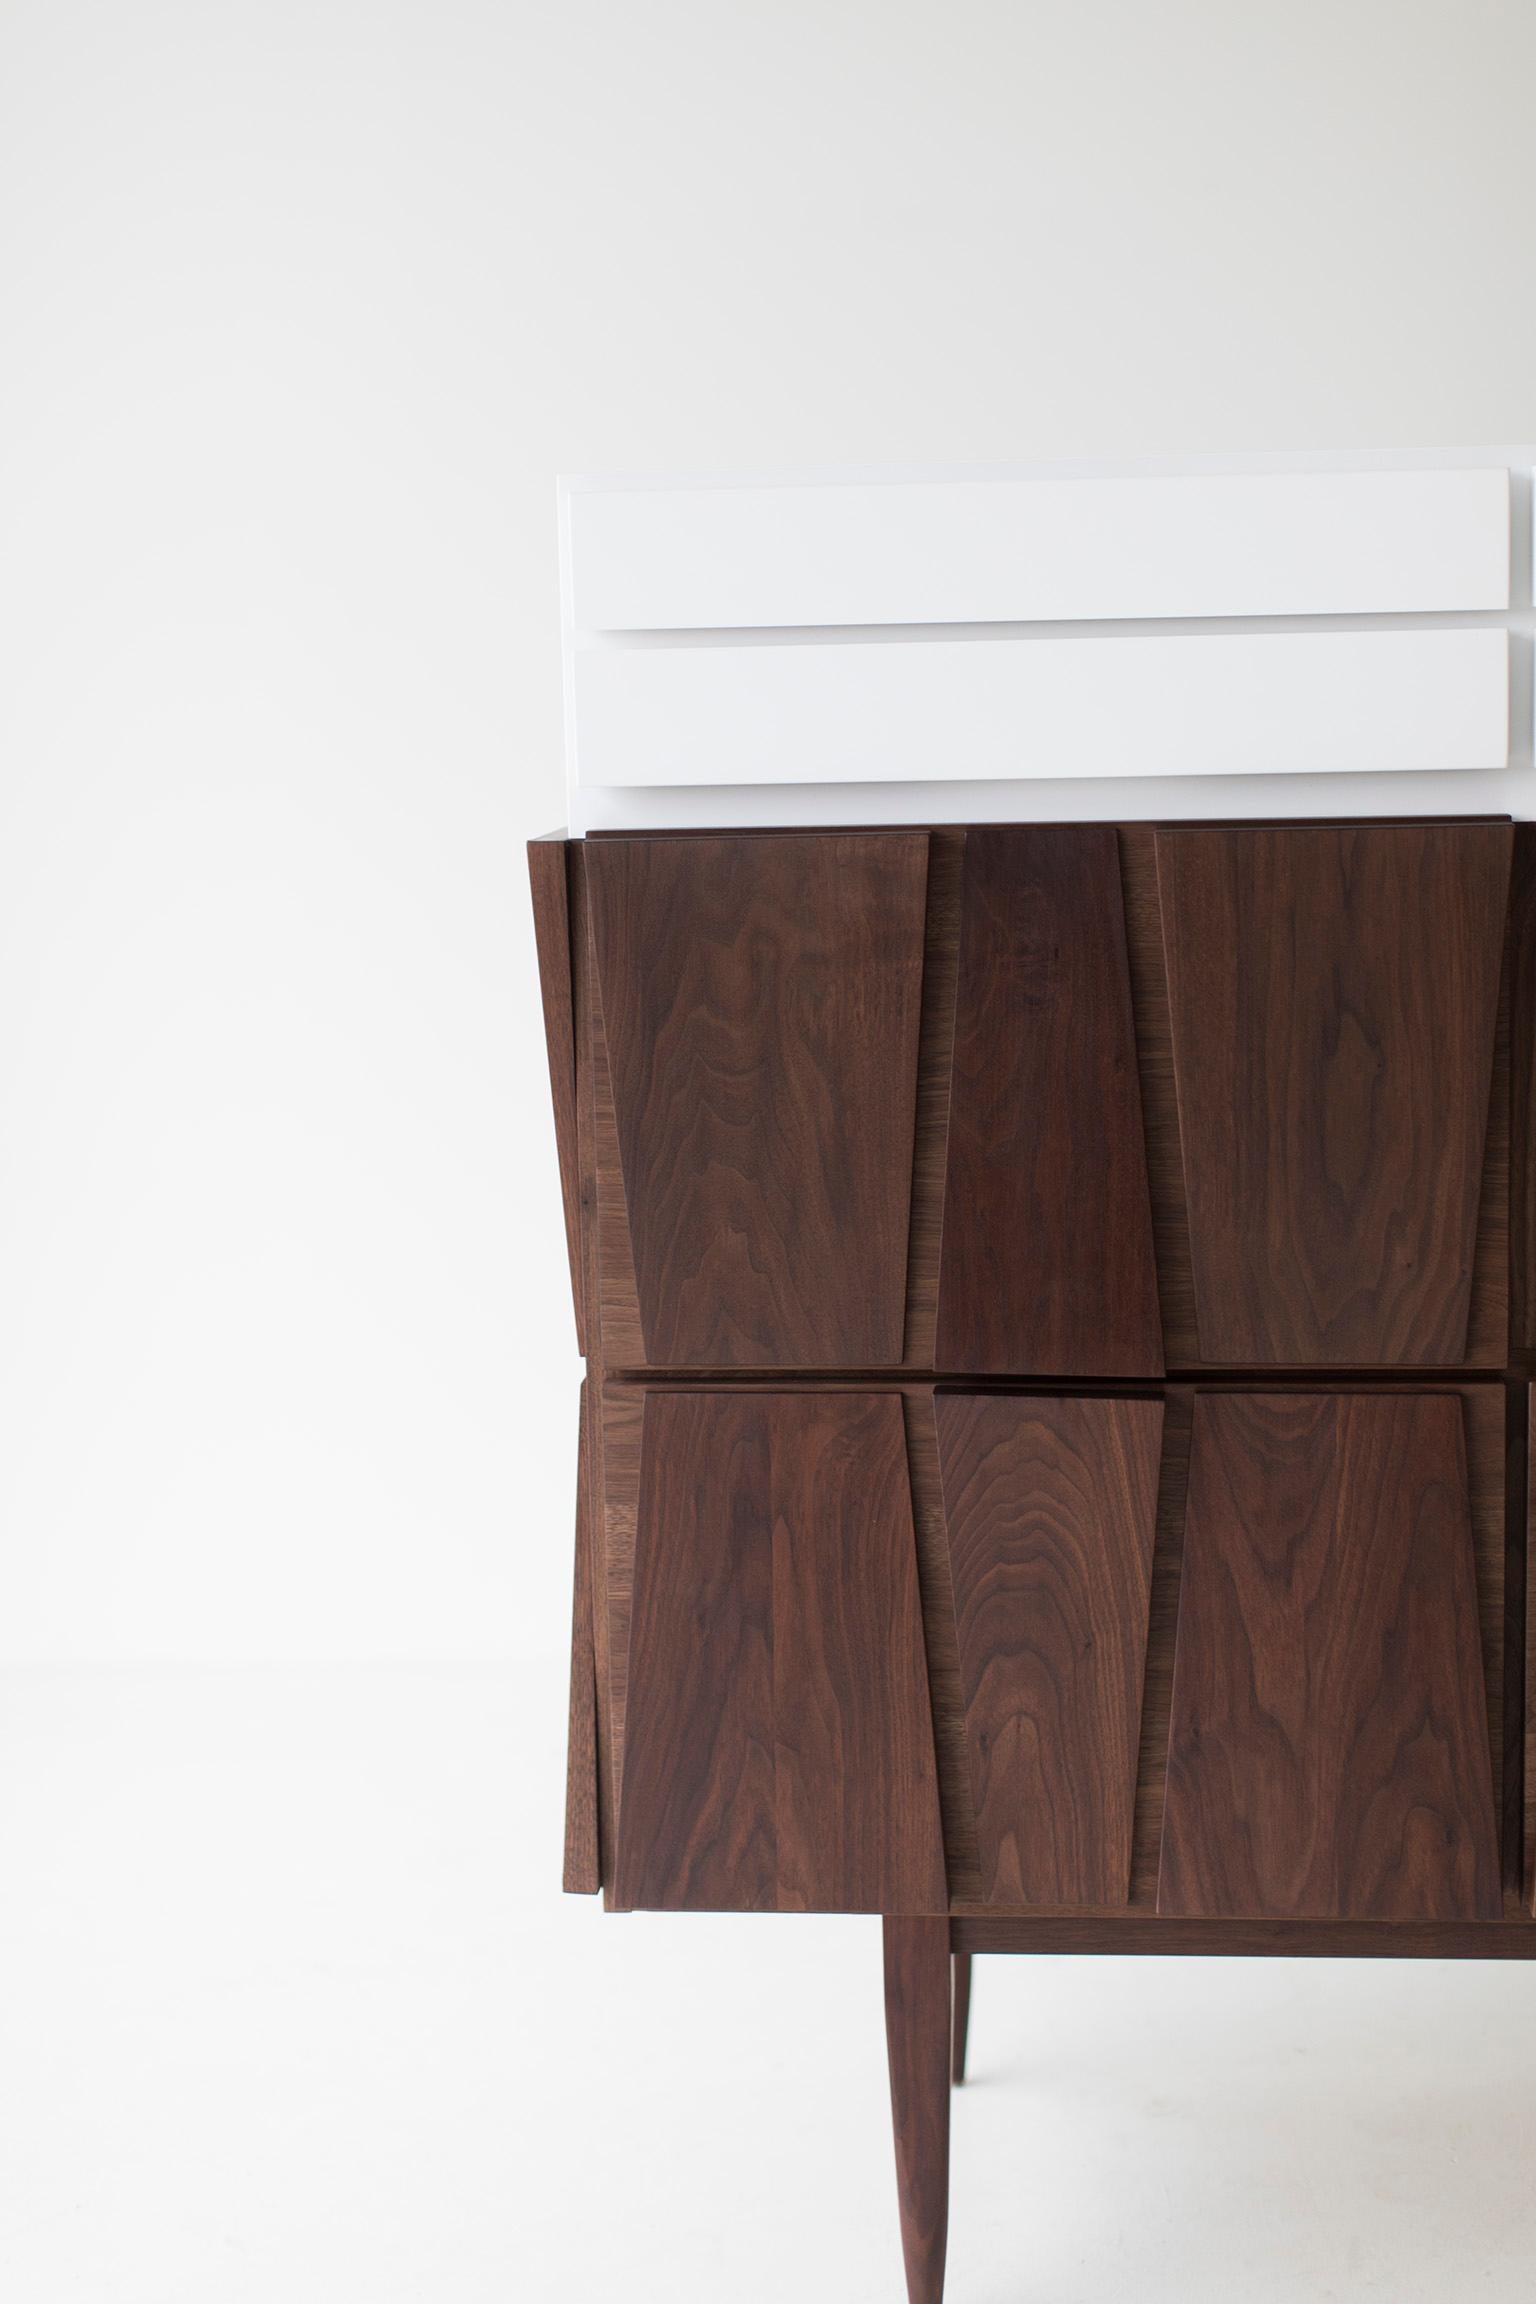 Craft Associates Dresser, Modern Walnut Dresser, 8 Drawers In Excellent Condition For Sale In Oak Harbor, OH